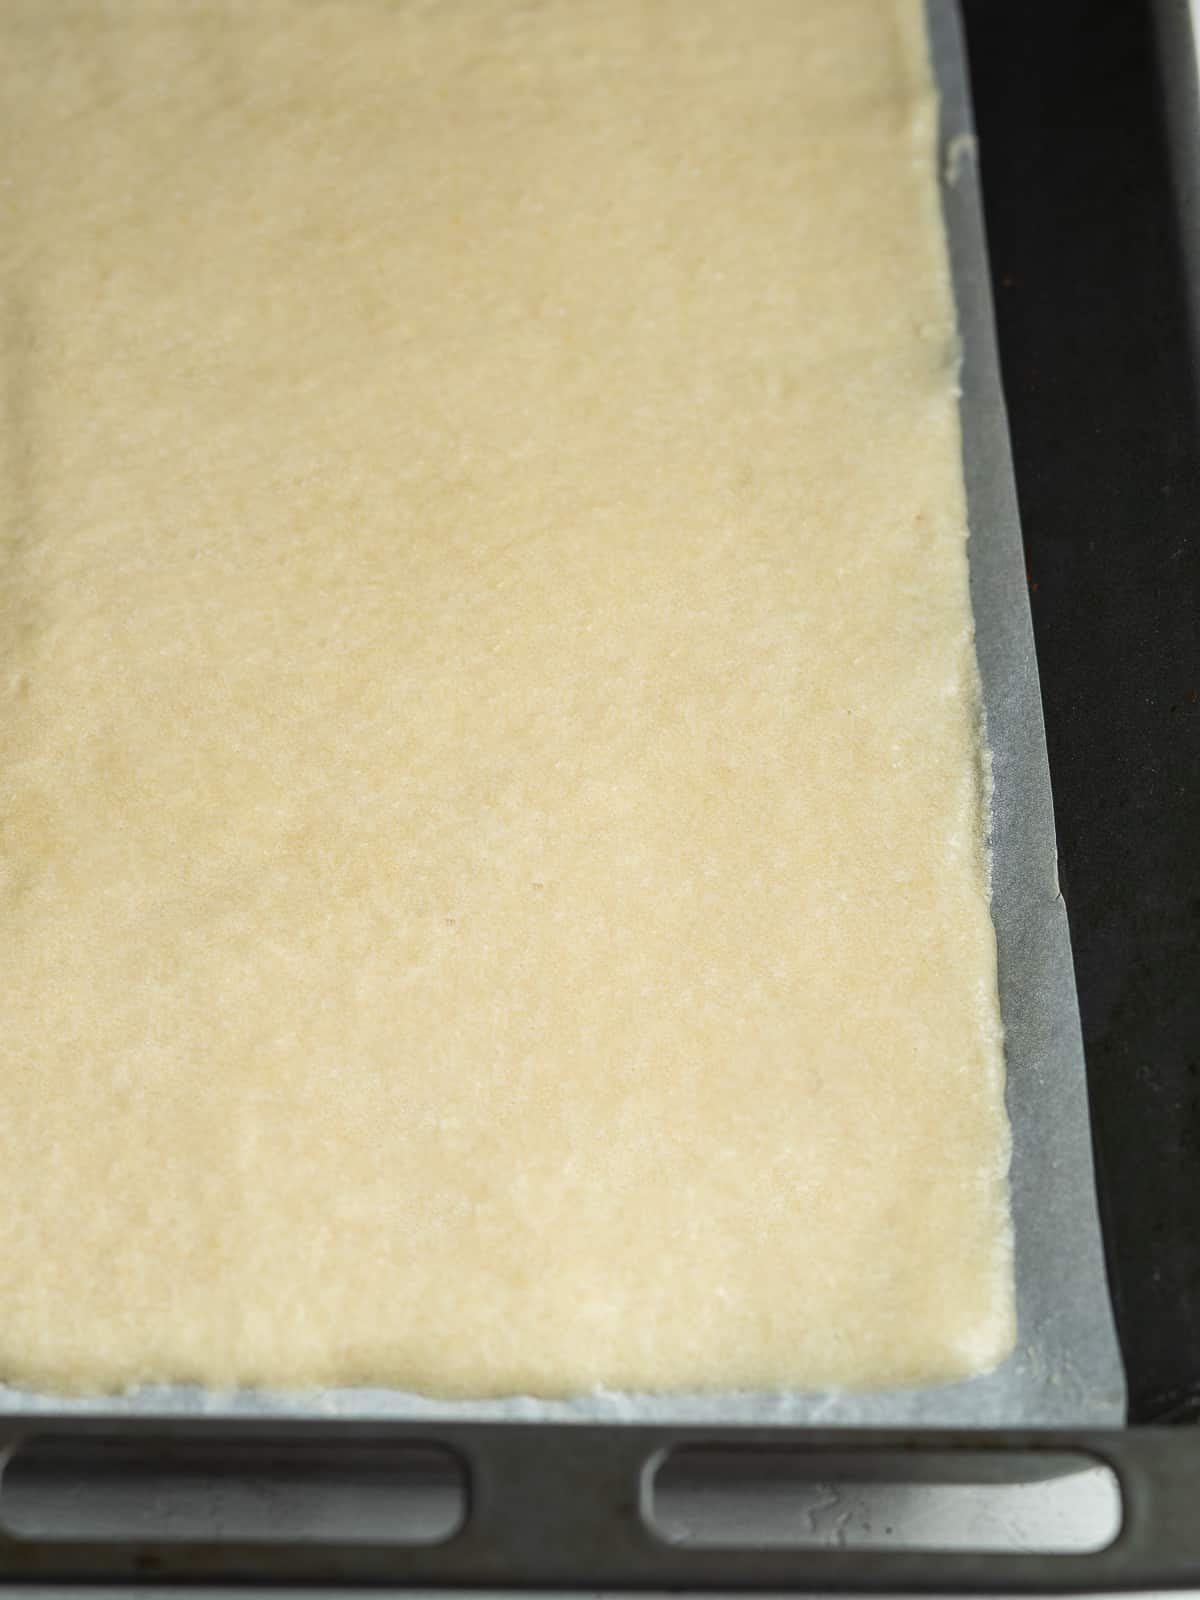 Cake batter onto a baking sheet 